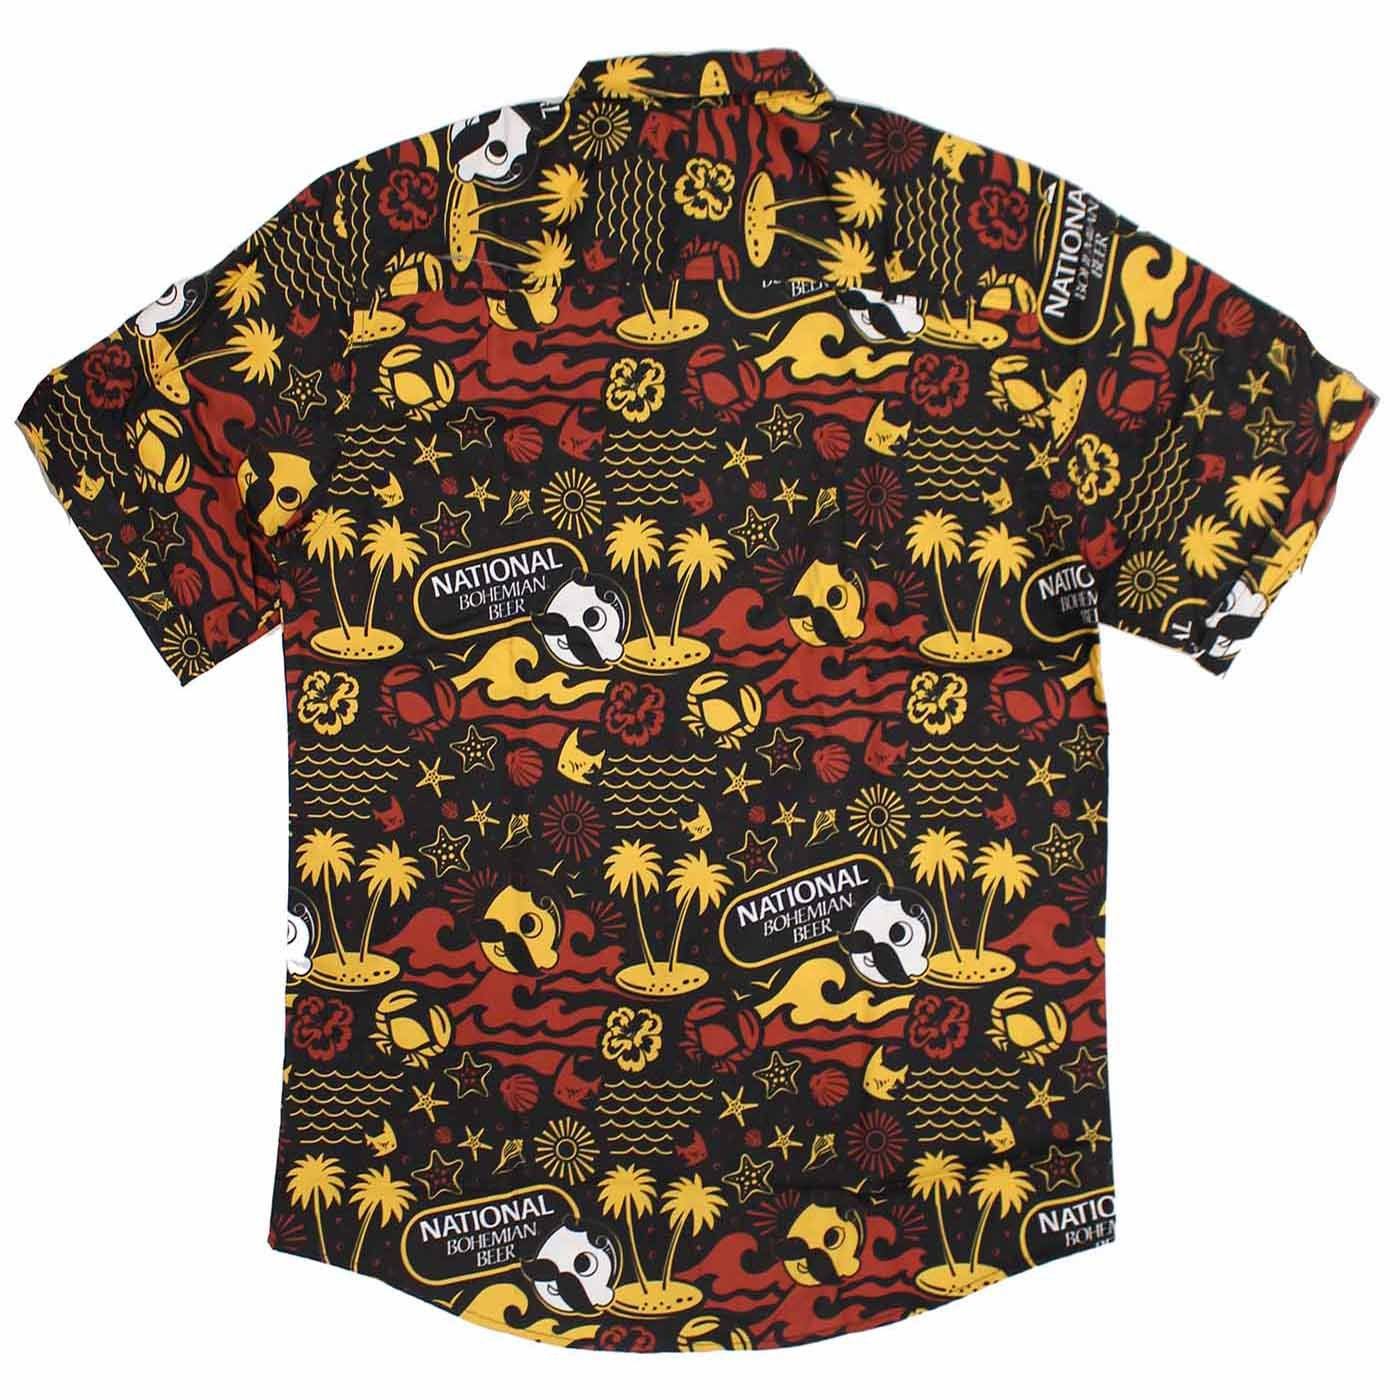 Natty Boh Beach Red & Gold (Black) / Hawaiian Shirt - Route One Apparel